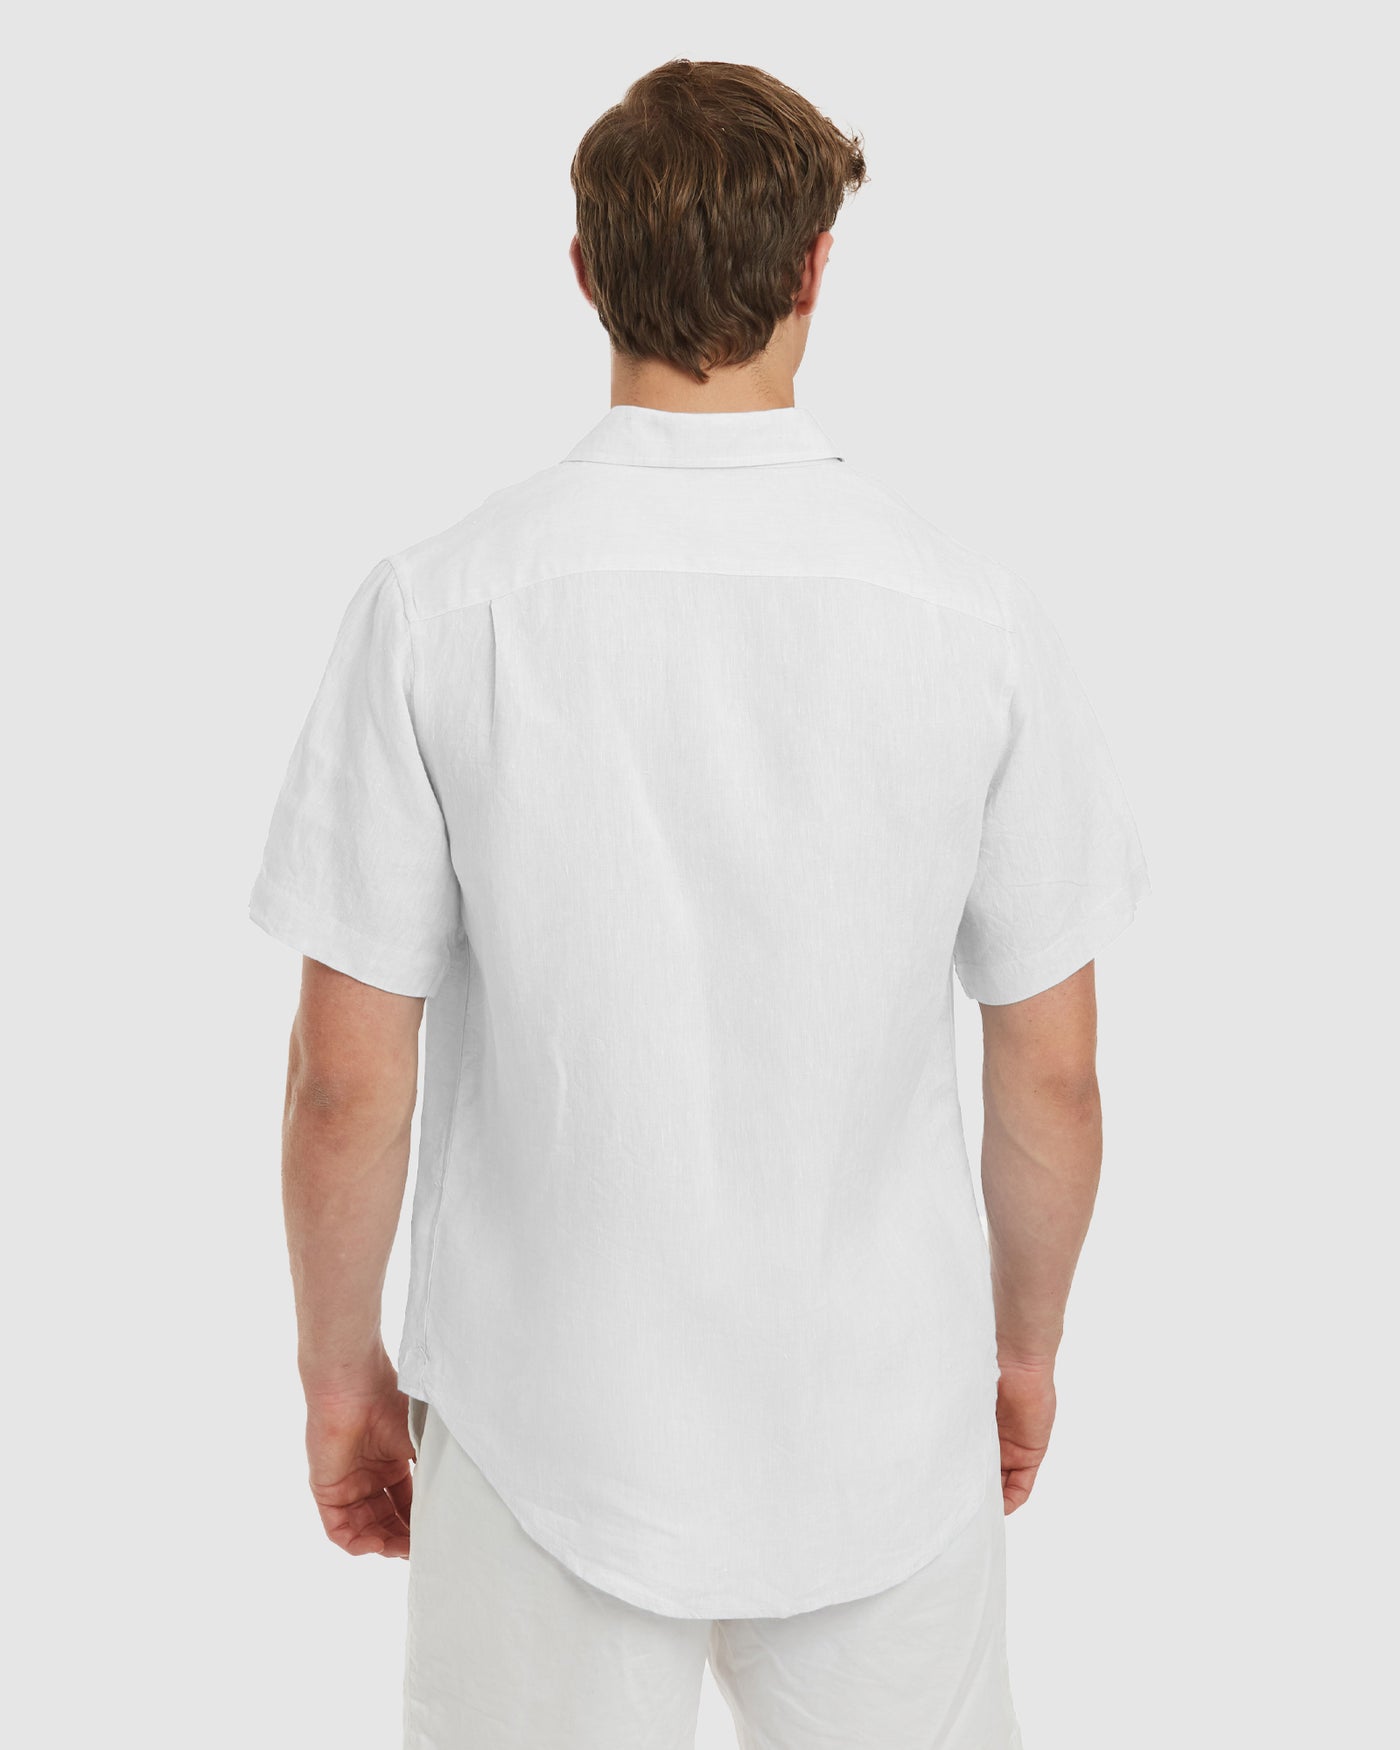 Ravello No Tuck Short Sleeve White Linen Shirt - Slim Fit